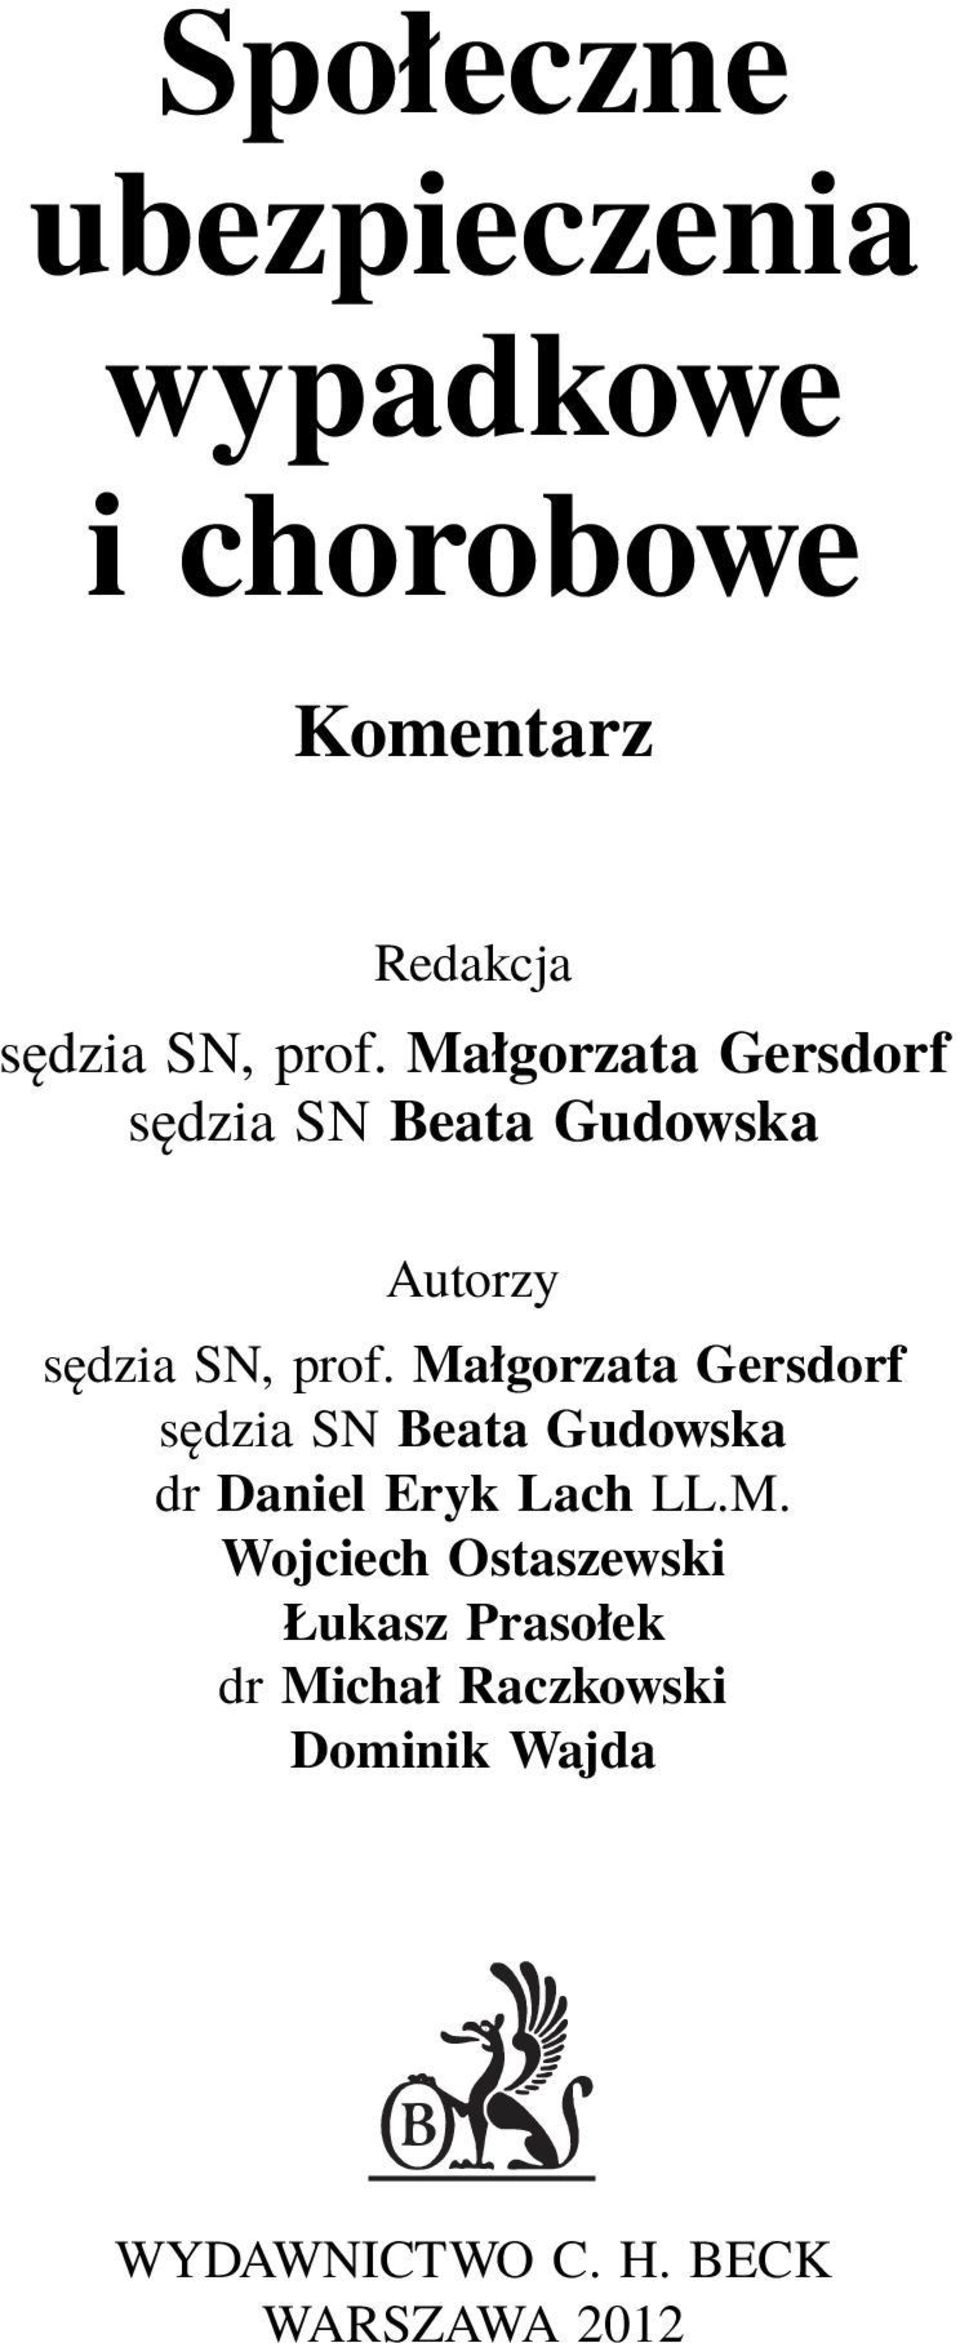 Małgorzata Gersdorf sędzia SN Beata Gudowska dr Daniel Eryk Lach LL.M. Wojciech